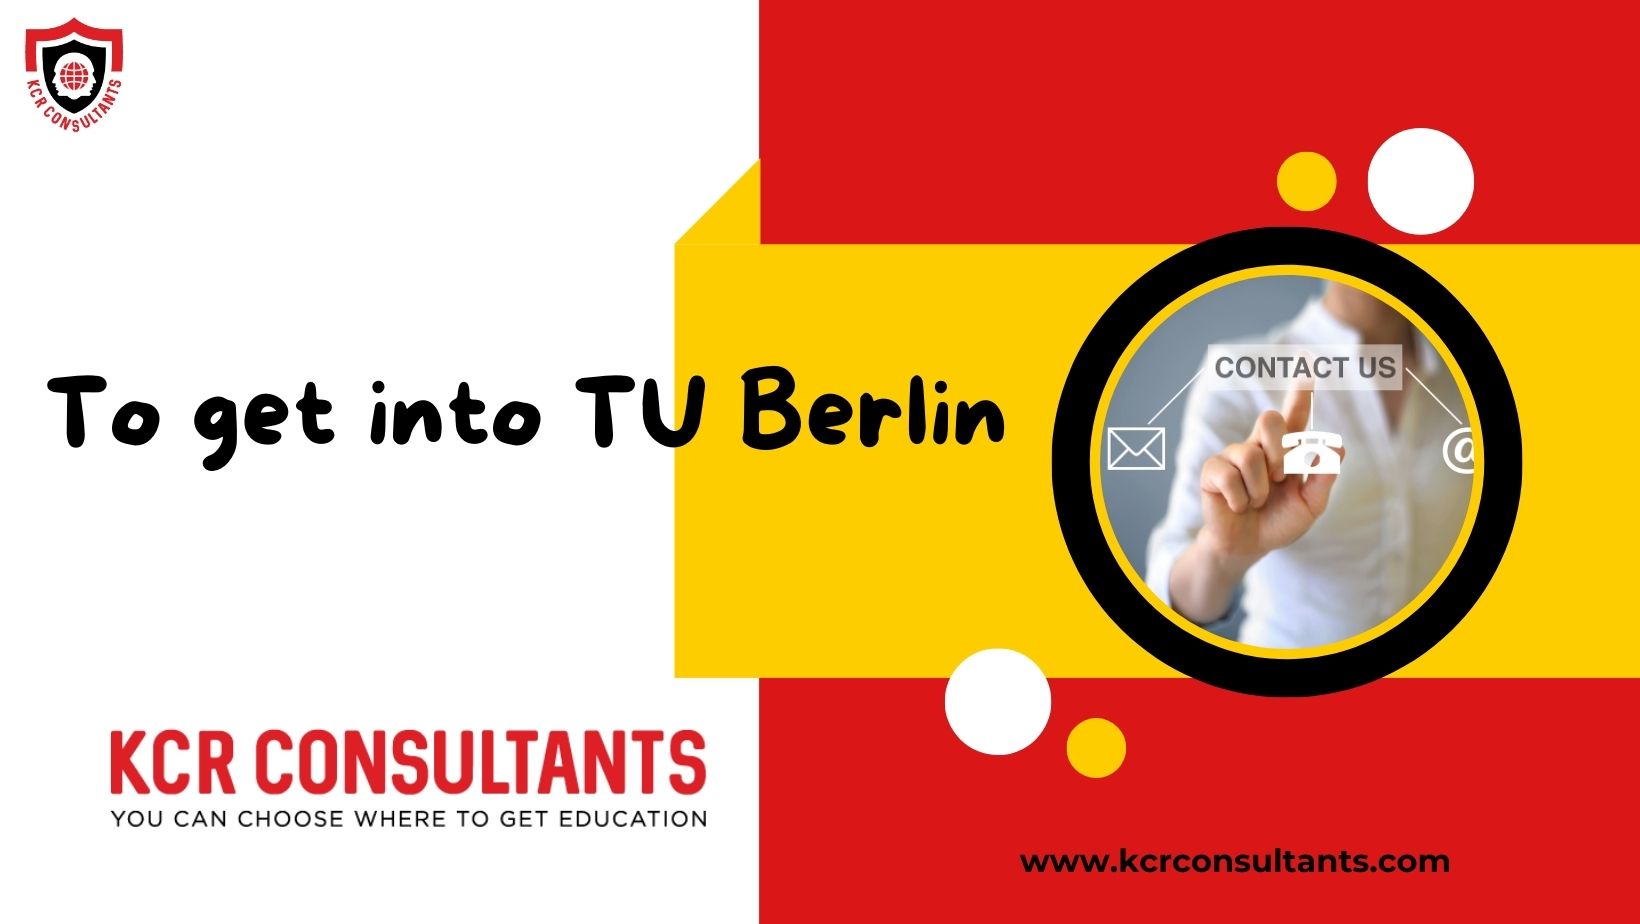 TU BERLIN GERMANY - KCR CONSULTANTS - Contact us